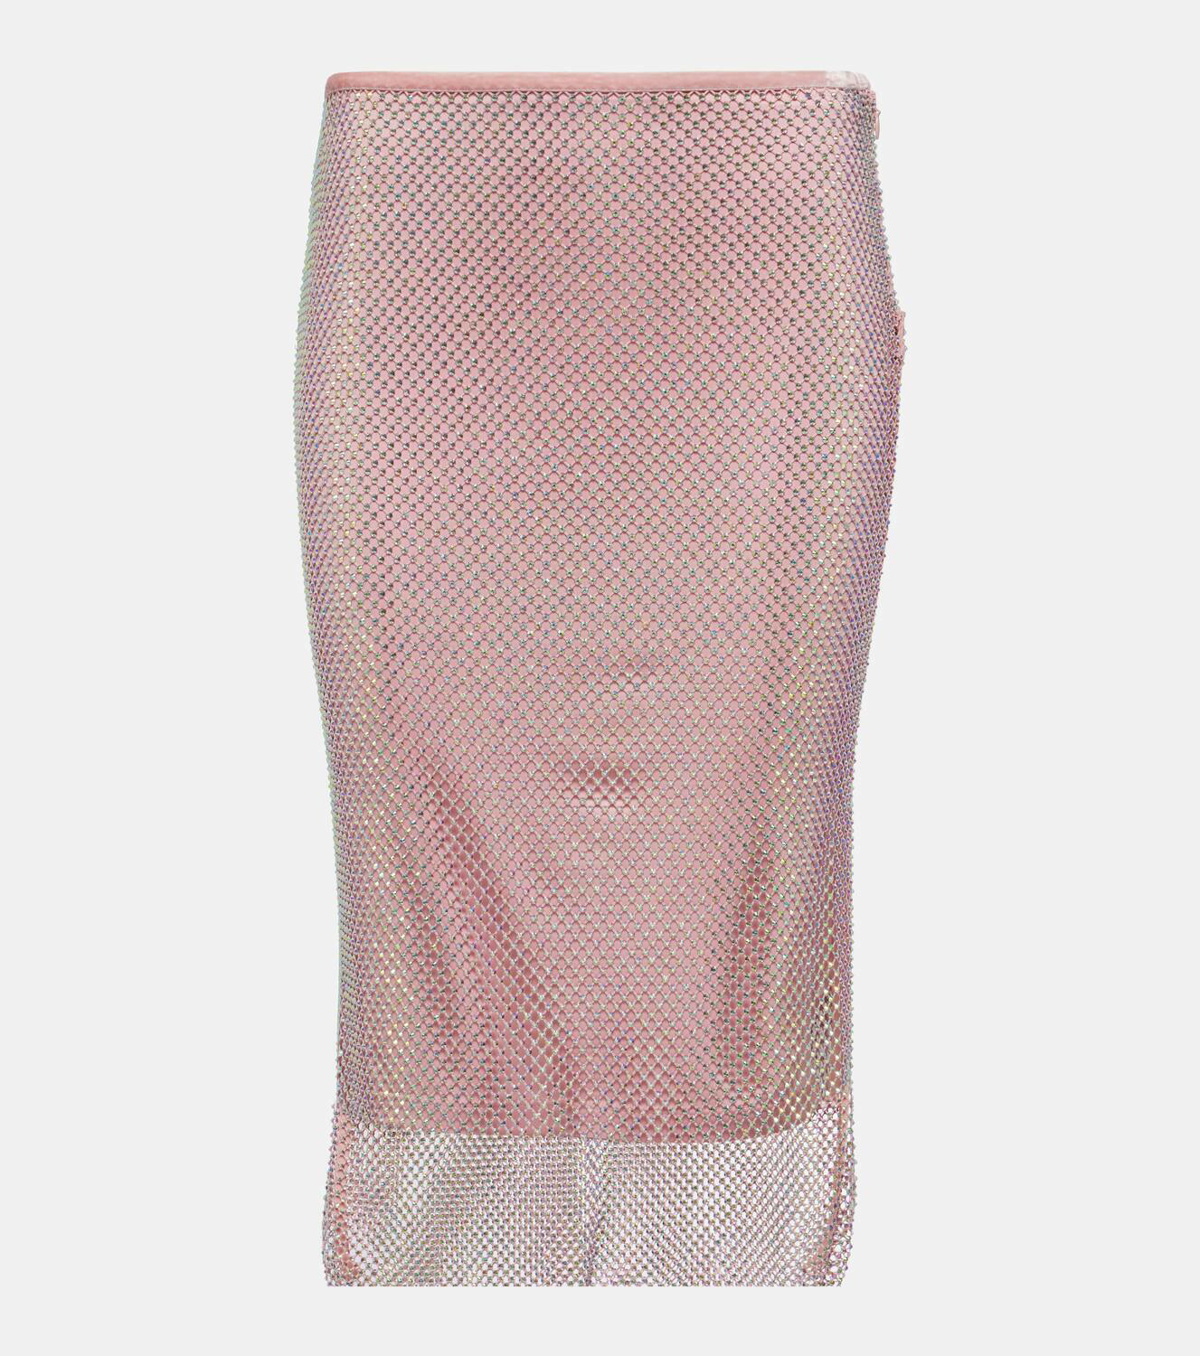 Sportmax Fishnet embellished midi skirt